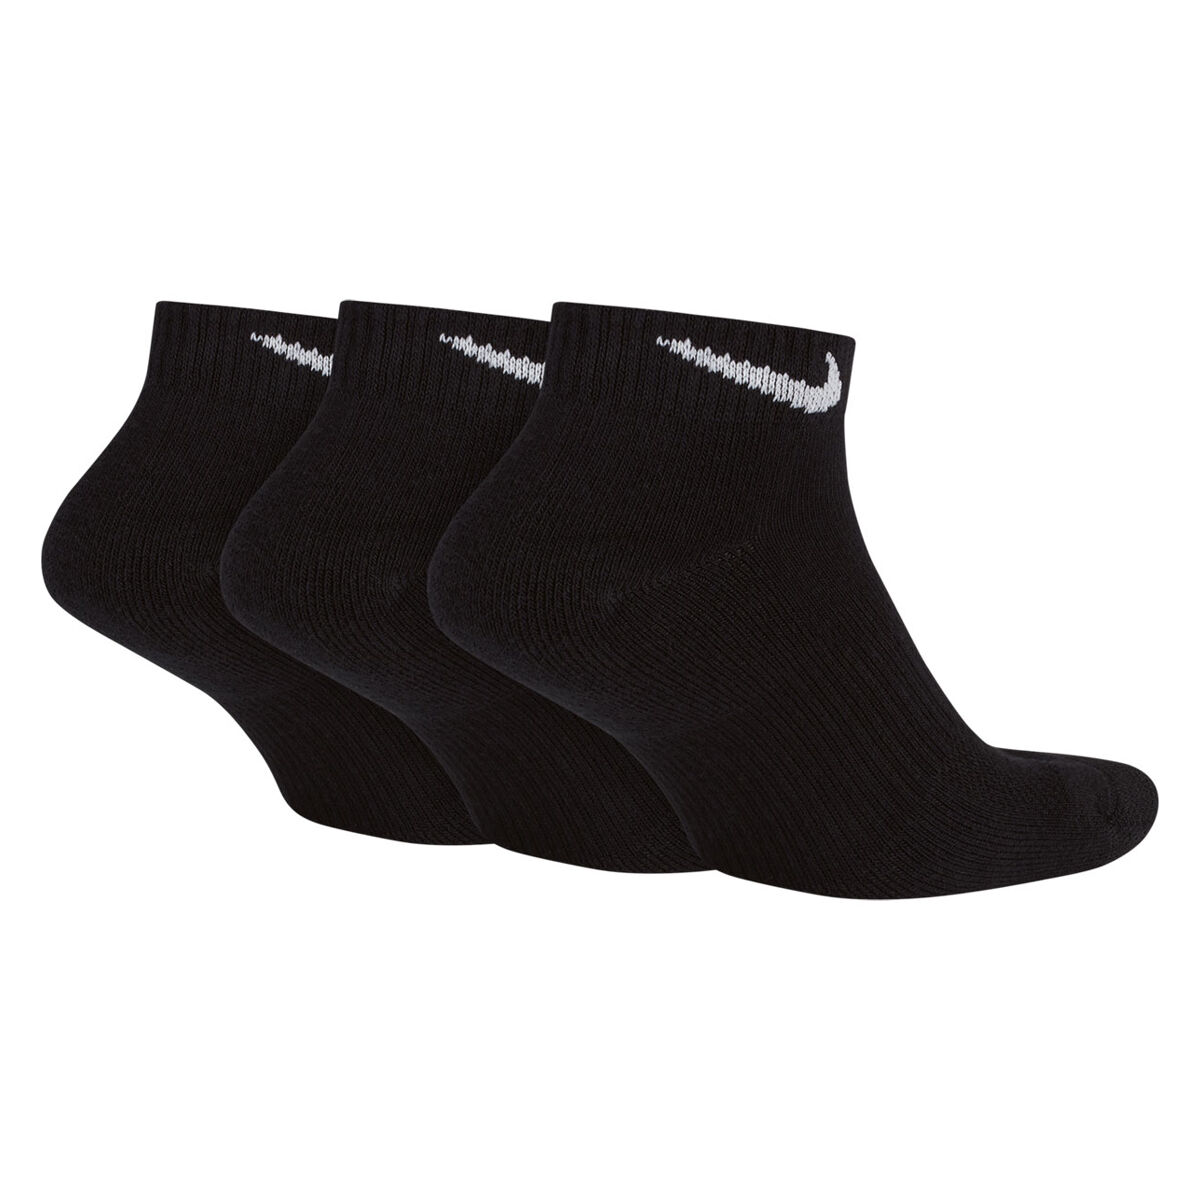 Nike Mens Cushion Low Cut 3 Pack Socks 